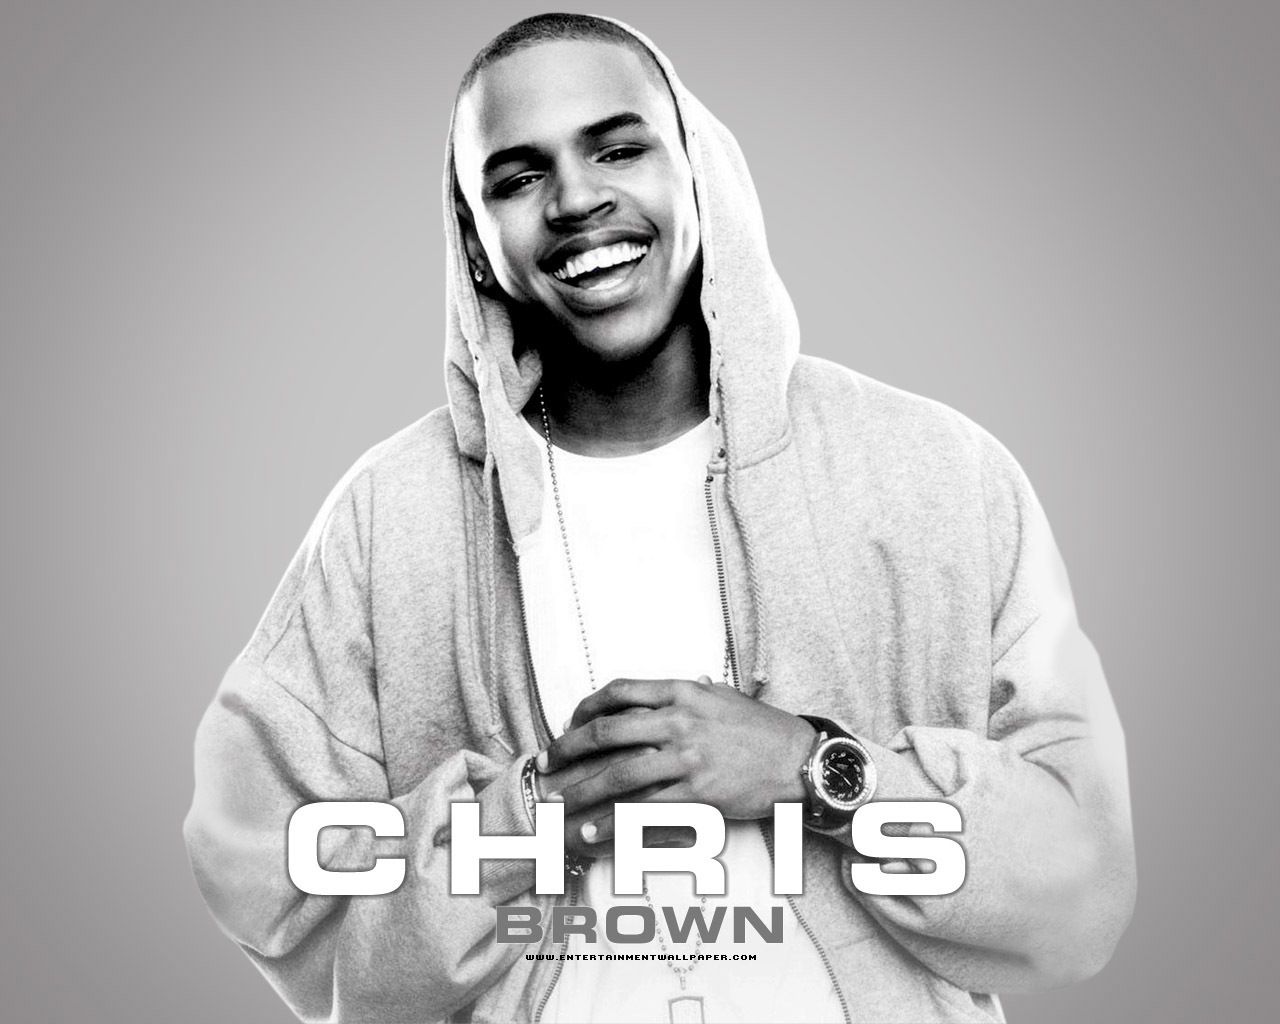 Chris - Chris Brown Wallpaper 6446965 - Fanpop